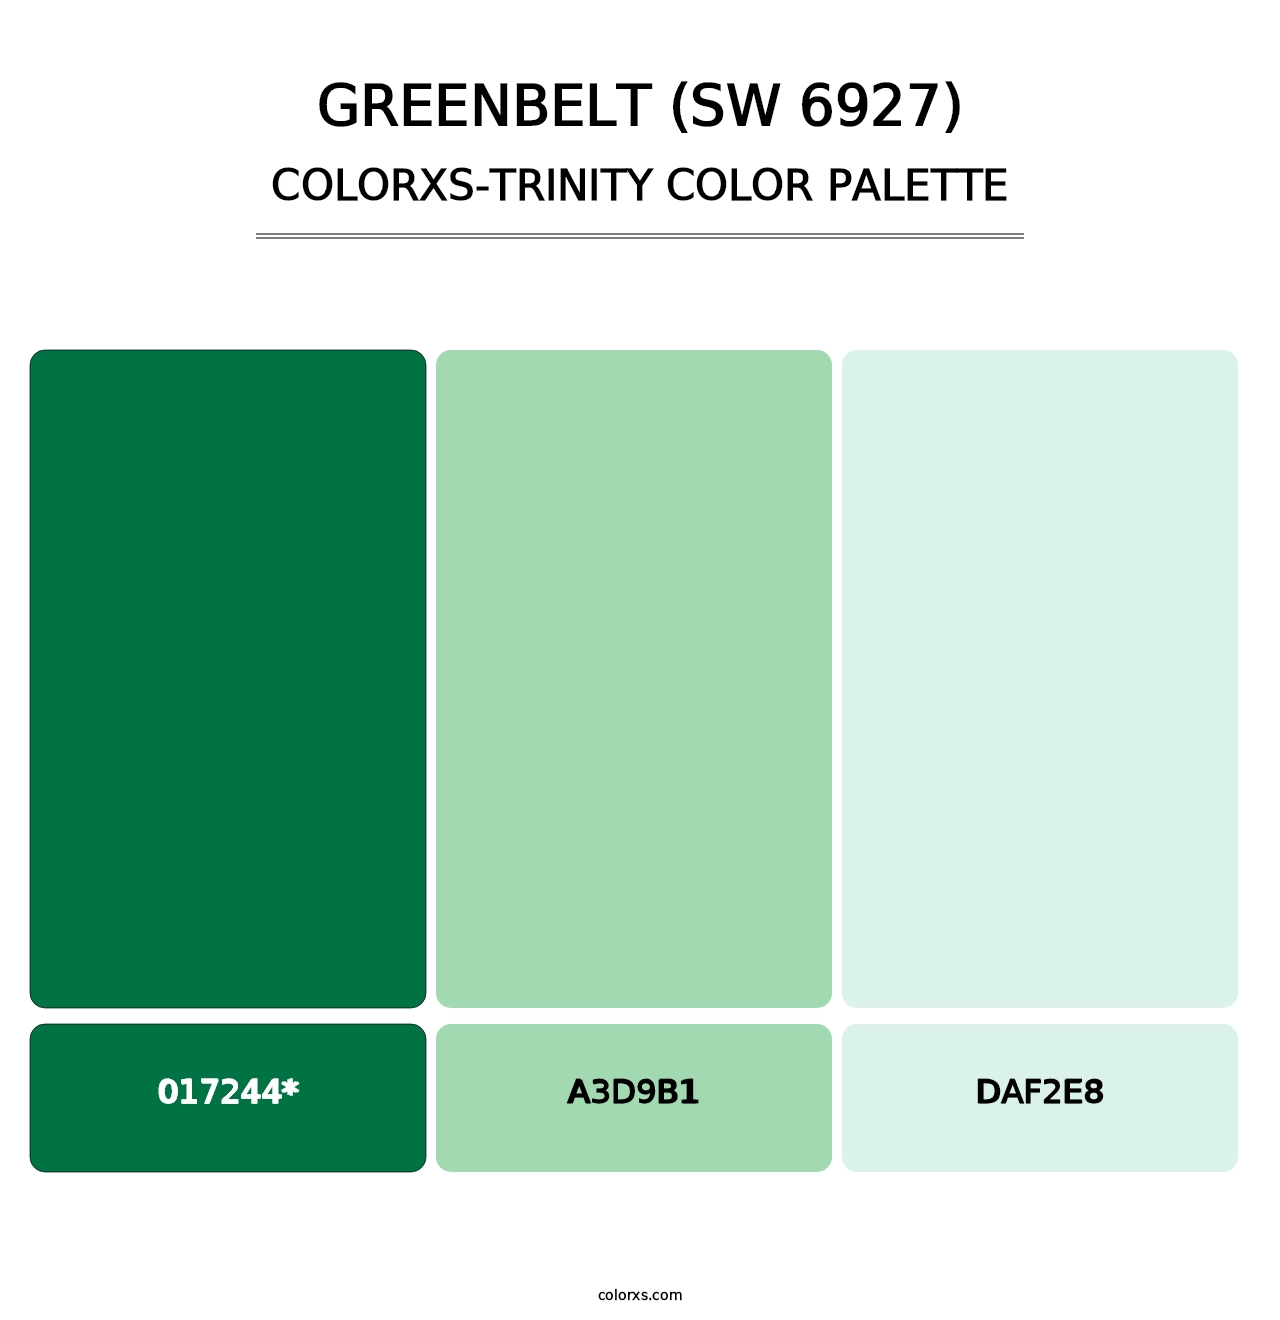 Greenbelt (SW 6927) - Colorxs Trinity Palette